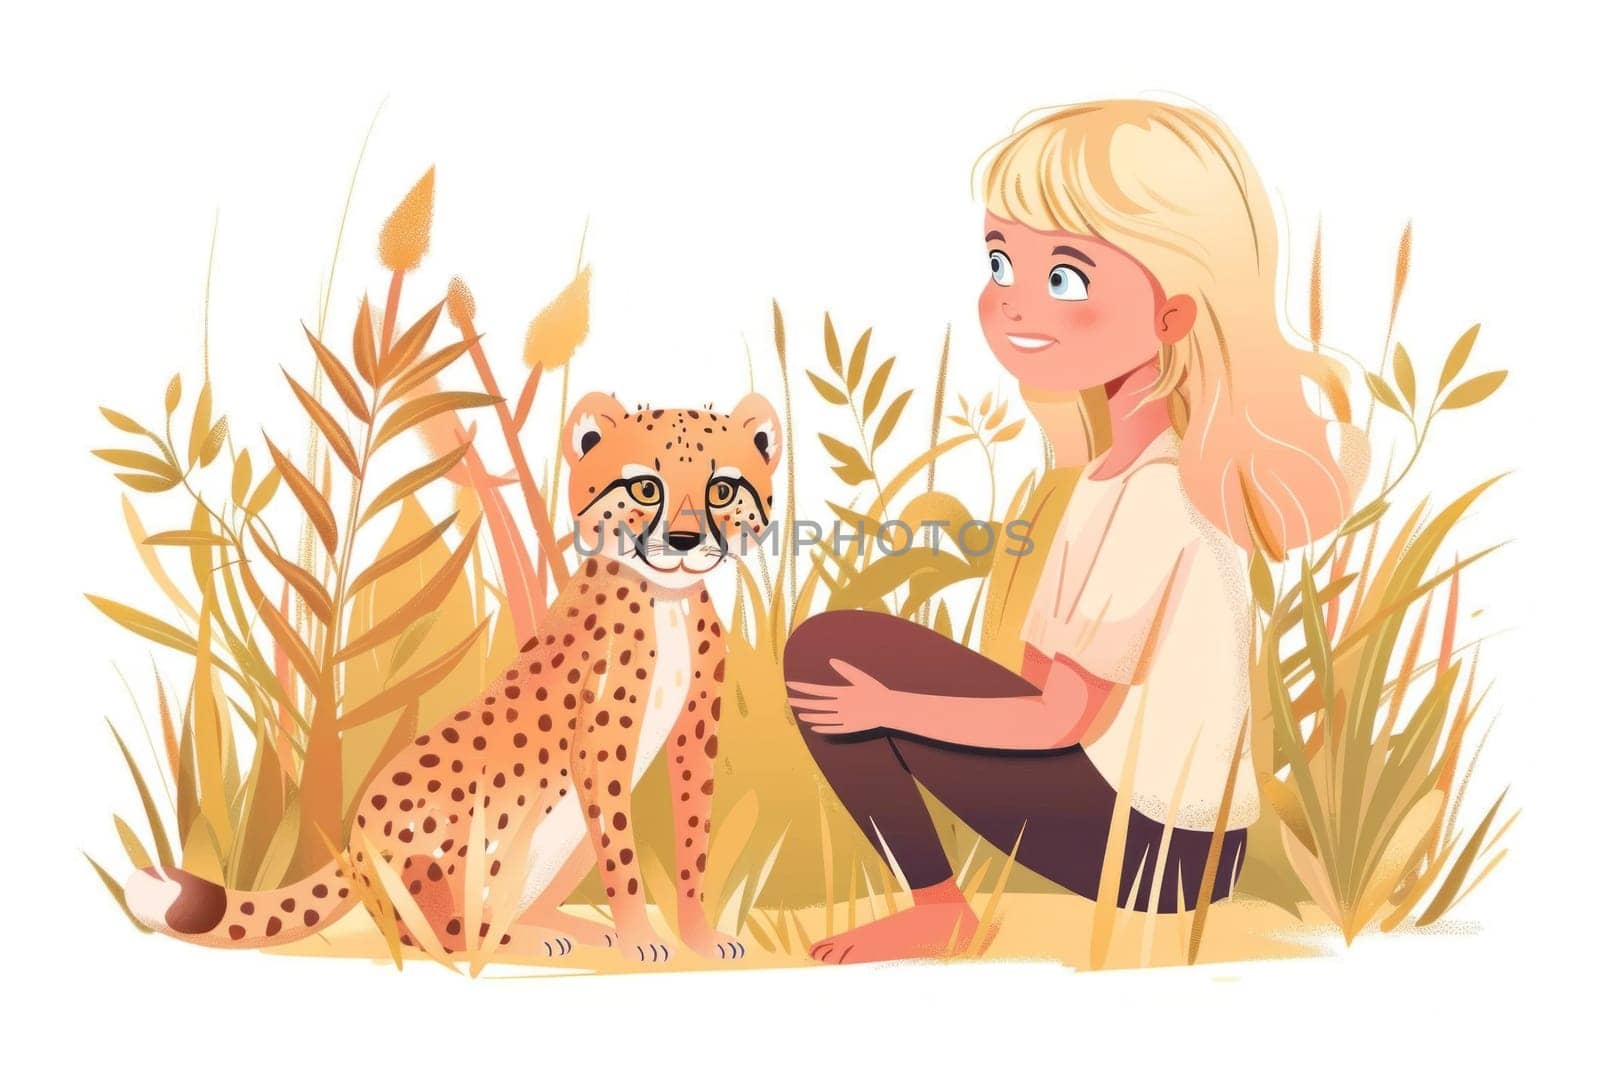 Girl enjoying a safari adventure with cheetah in cartoon style outdoors beauty and wildlife theme